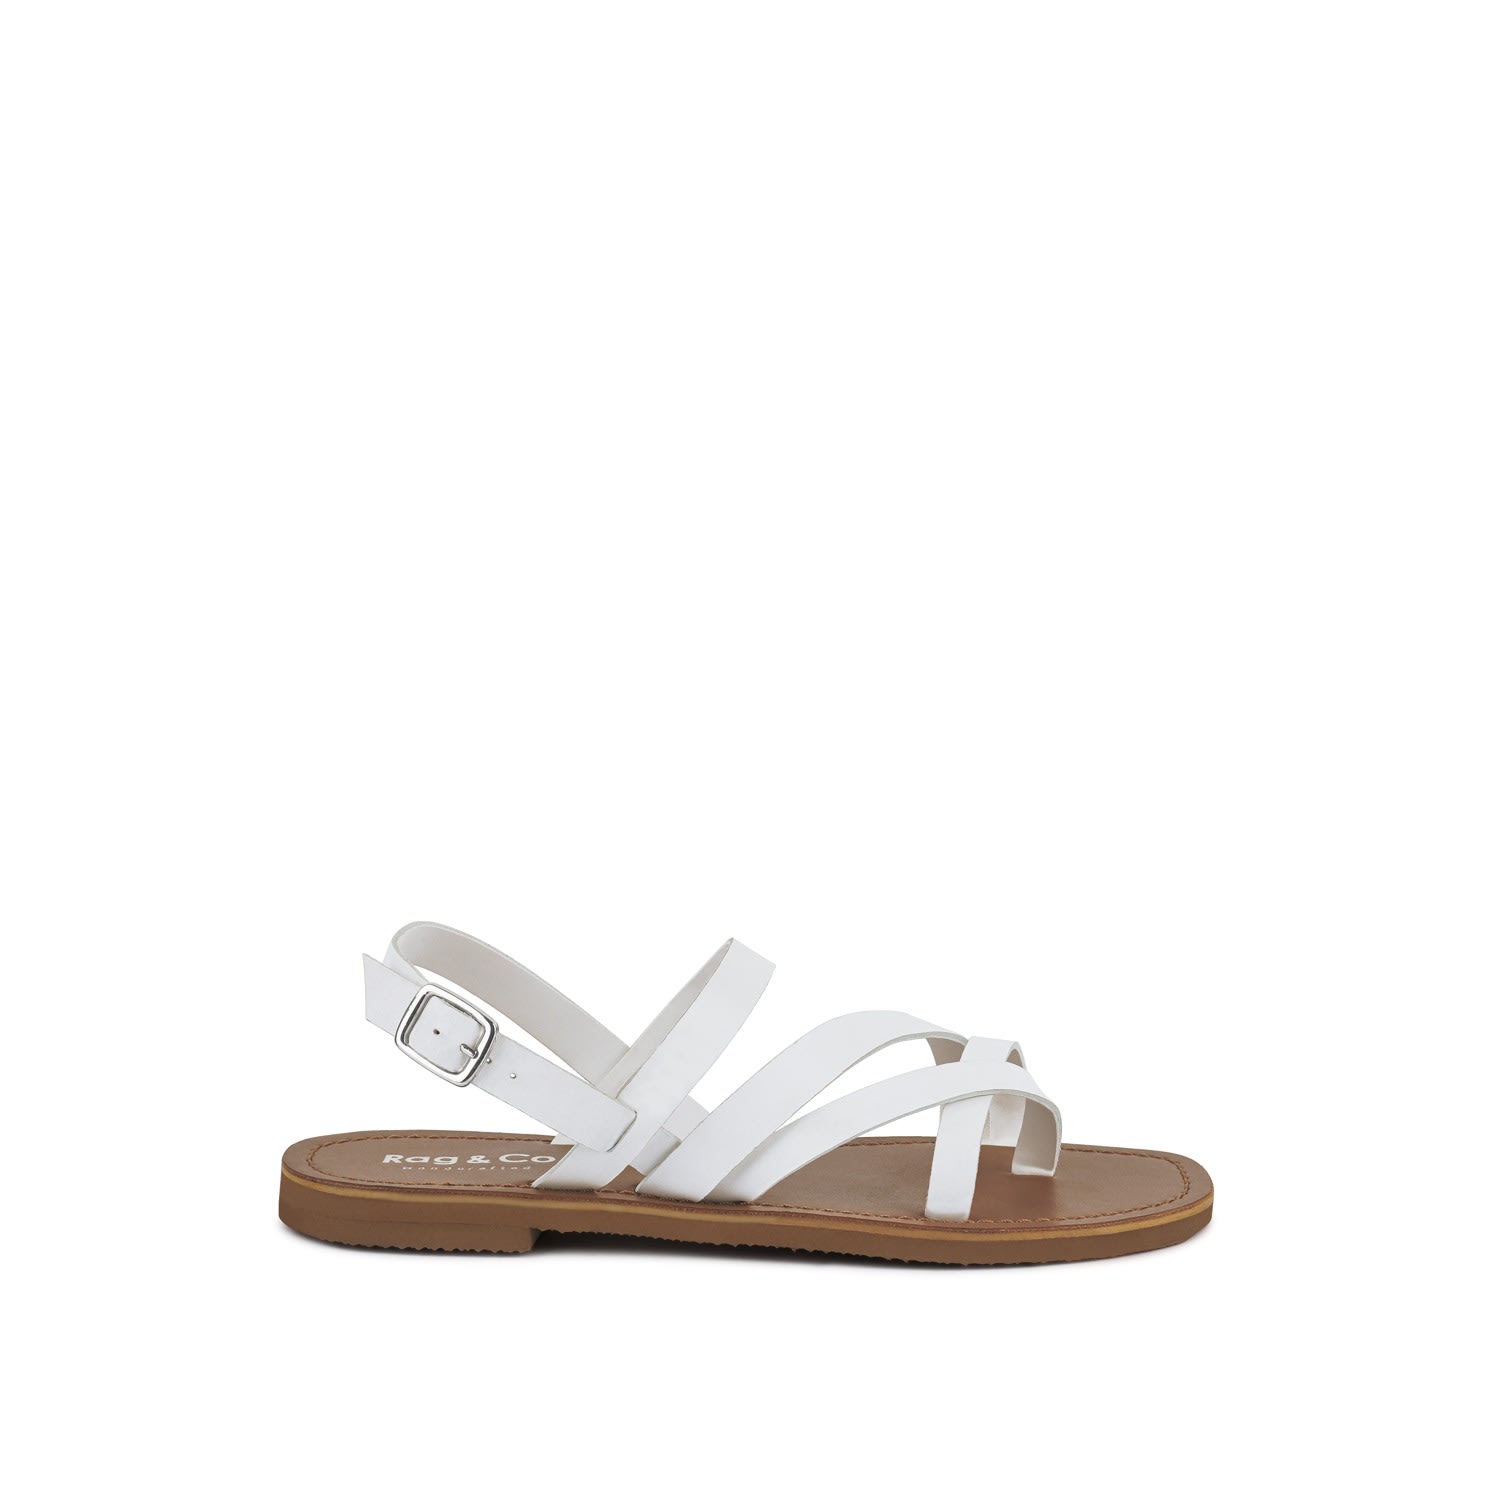 Rag & Co Women's Sloana White Strappy Flat Sandals